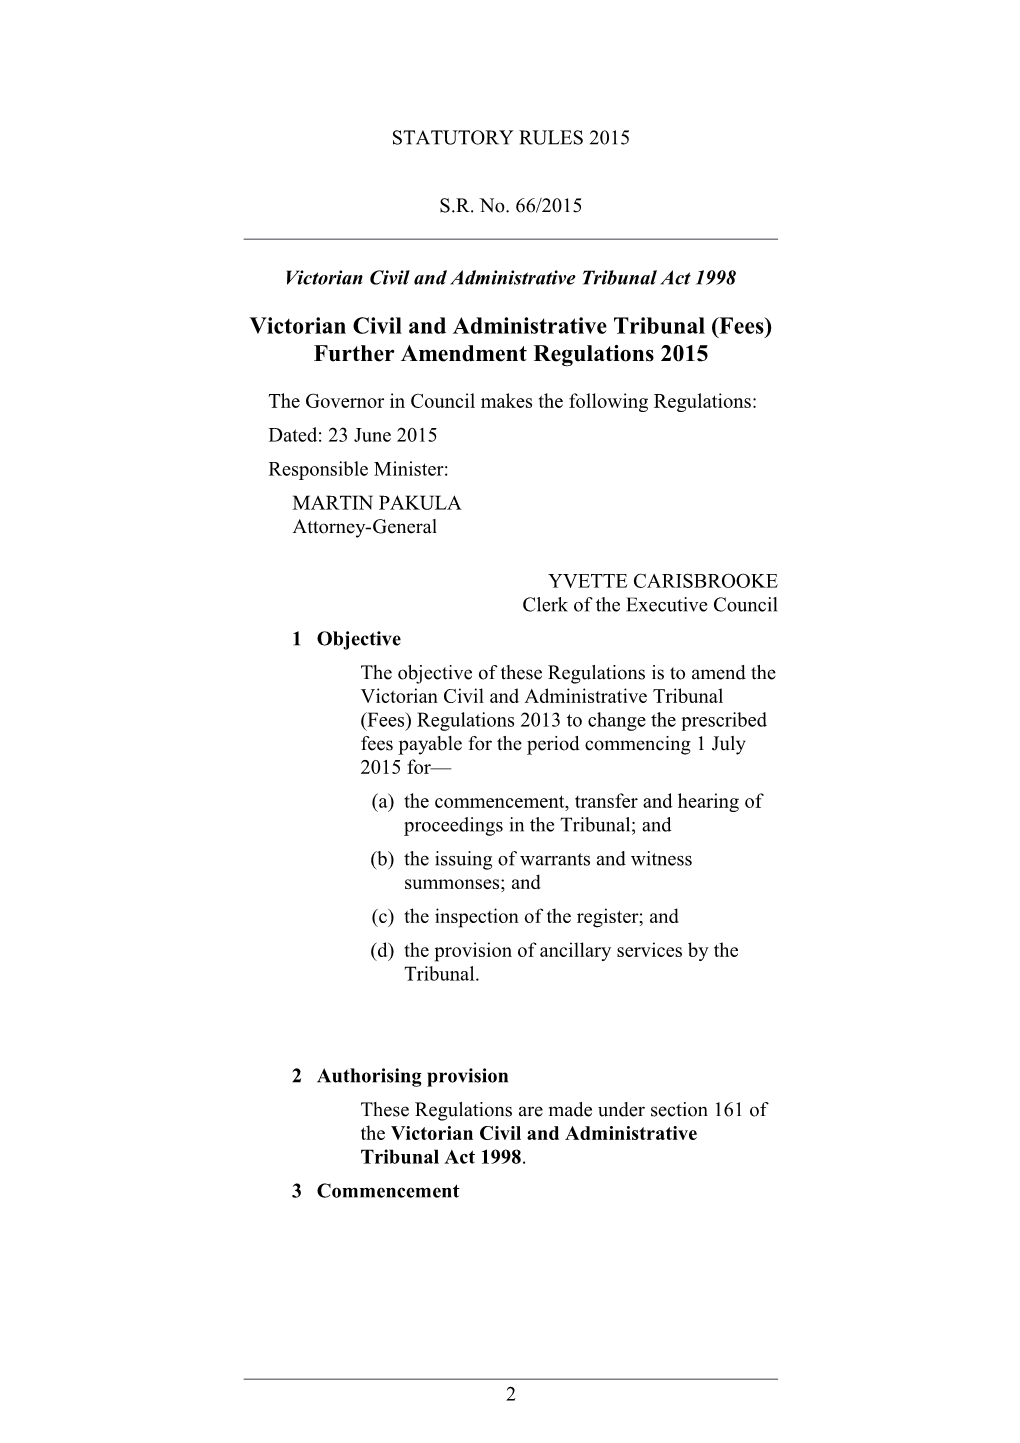 Victorian Civil and Administrative Tribunal (Fees) Further Amendment Regulations 2015